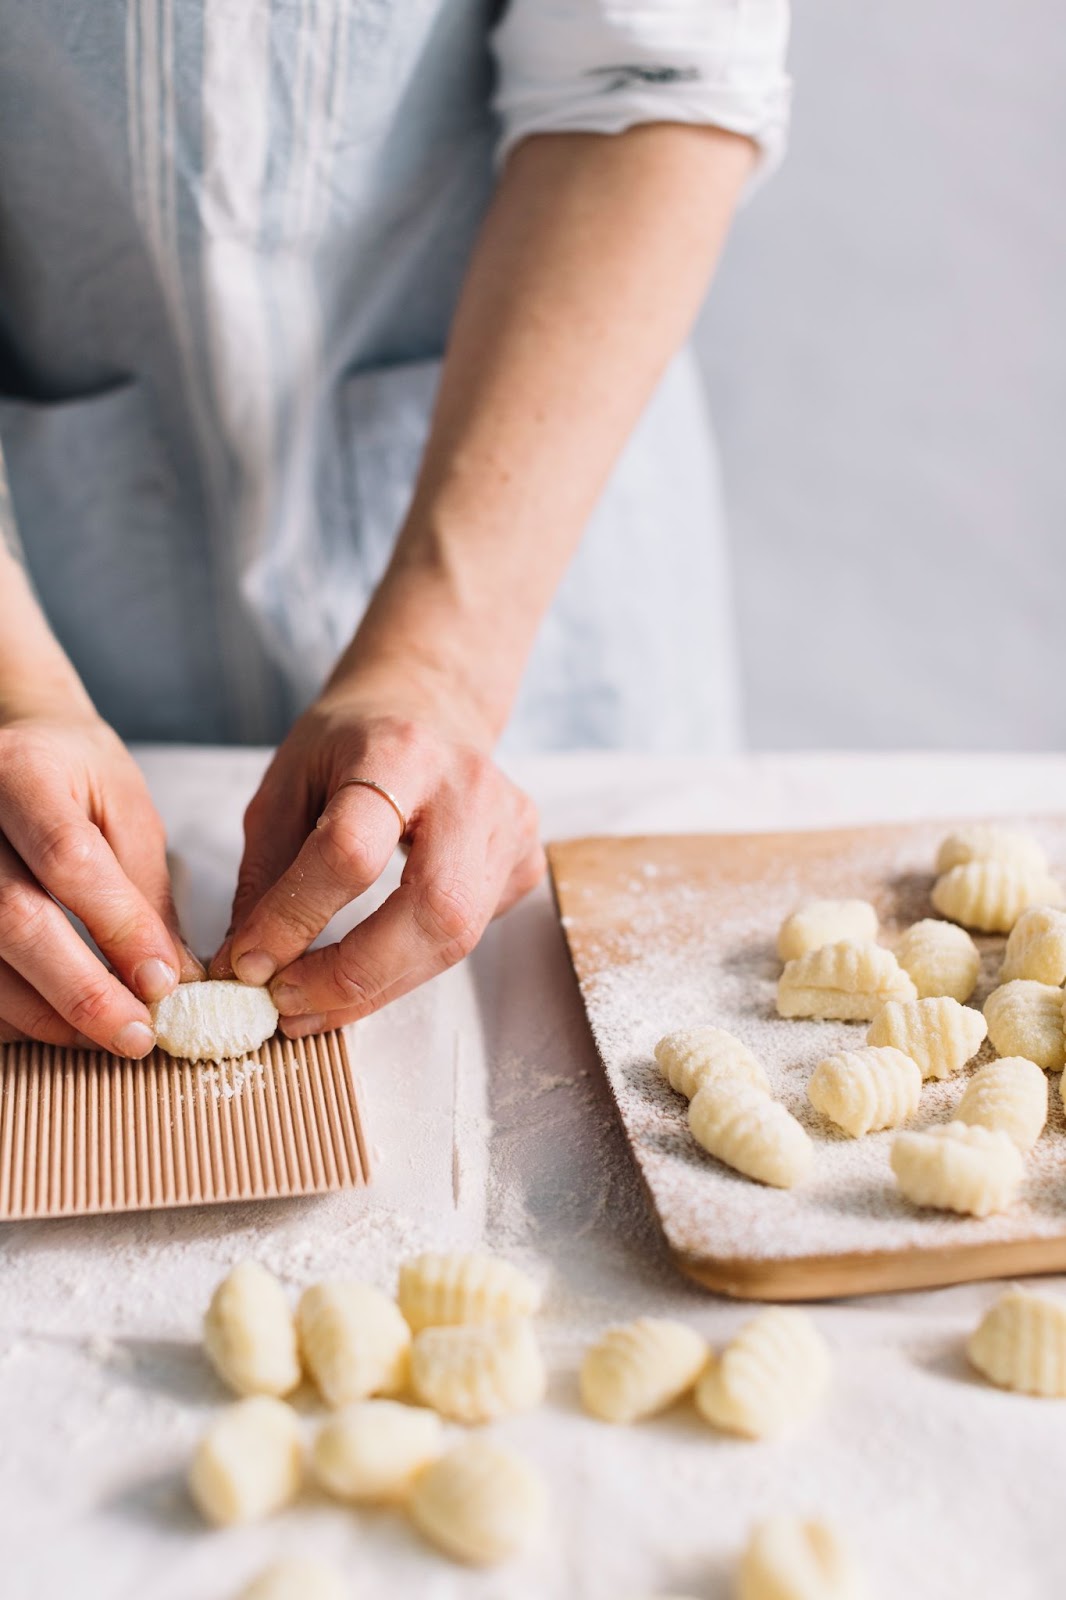 making pasta dumplings with flour